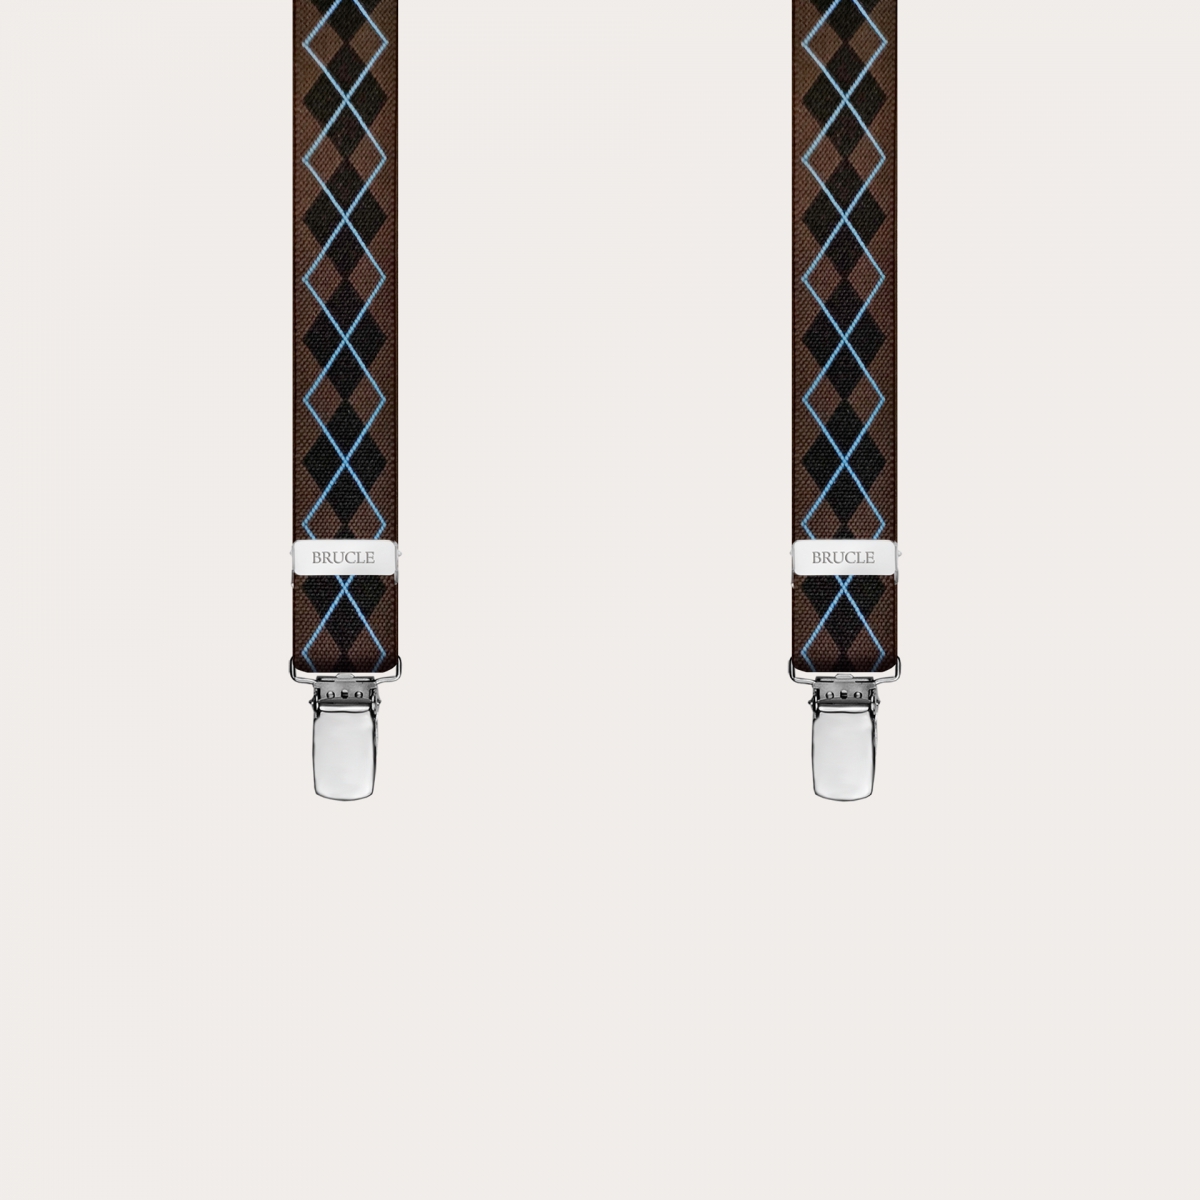 Bretelles fines tartans brun, forme Y